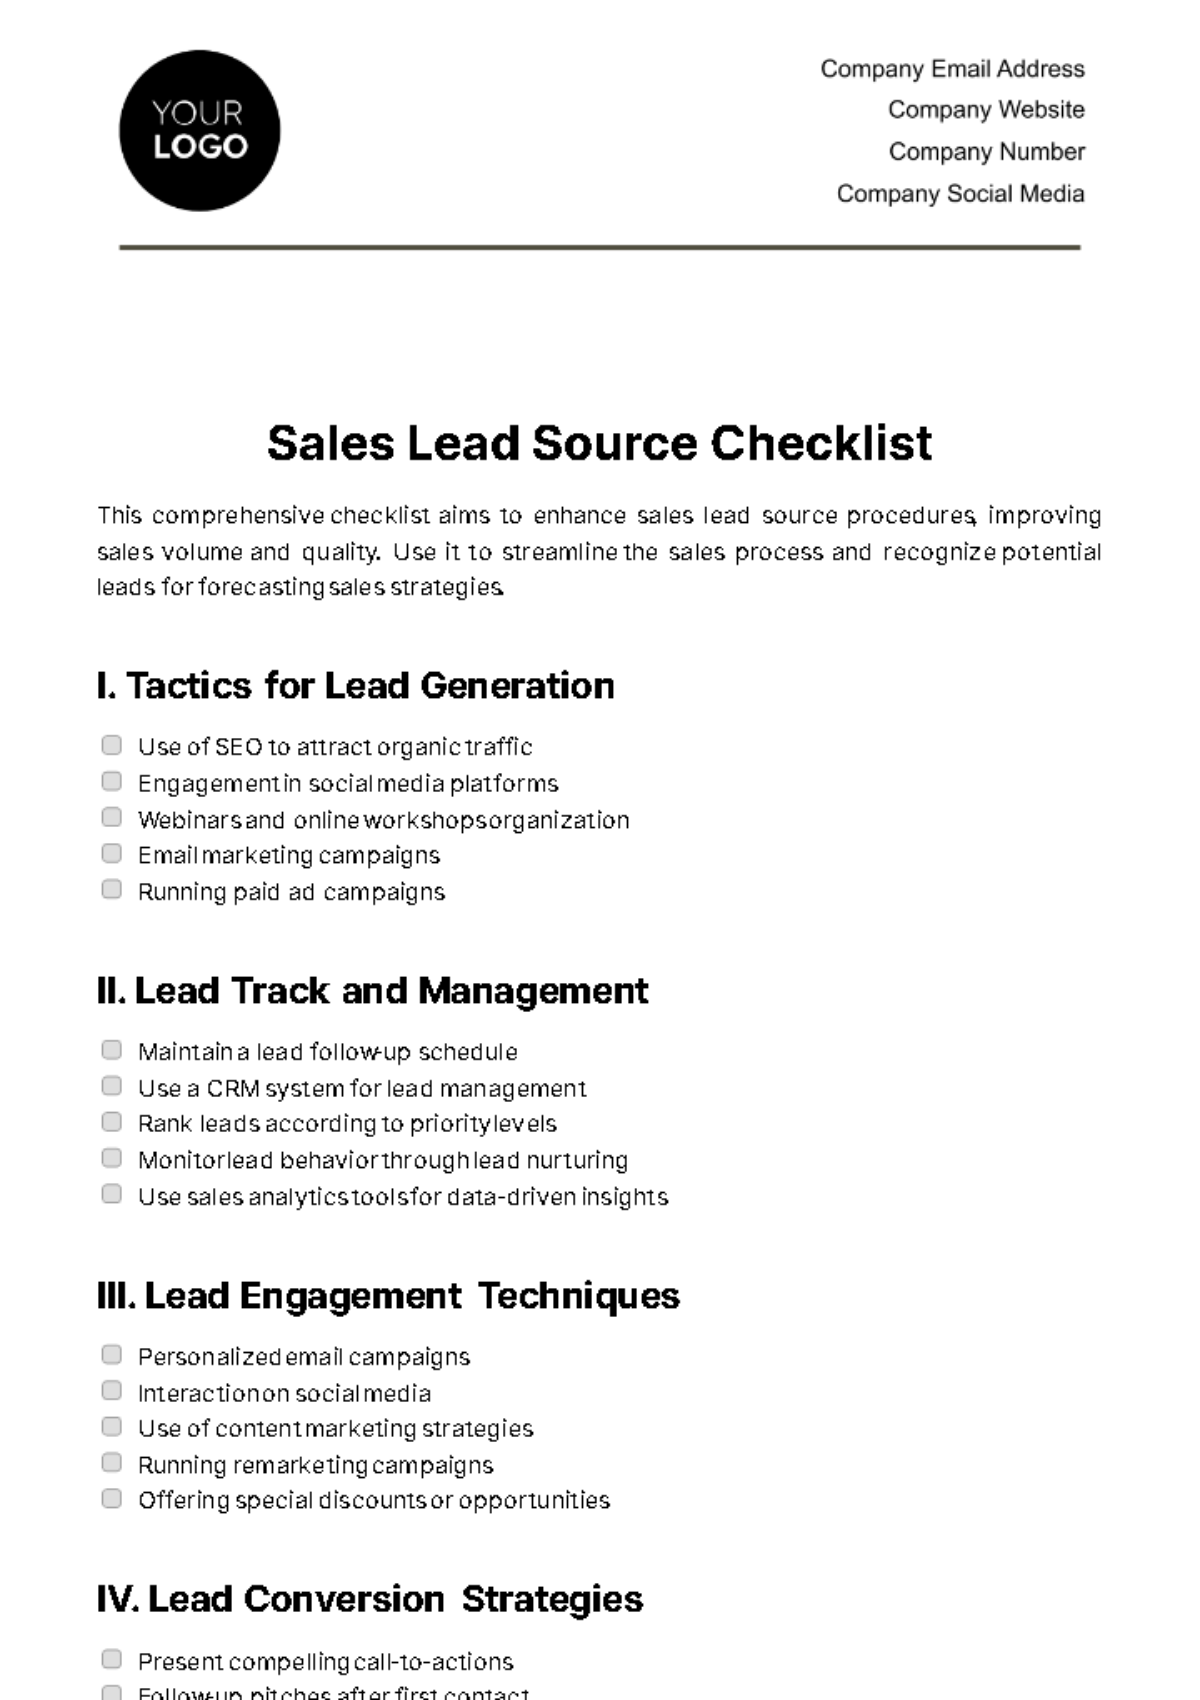 Free Sales Lead Source Checklist Template